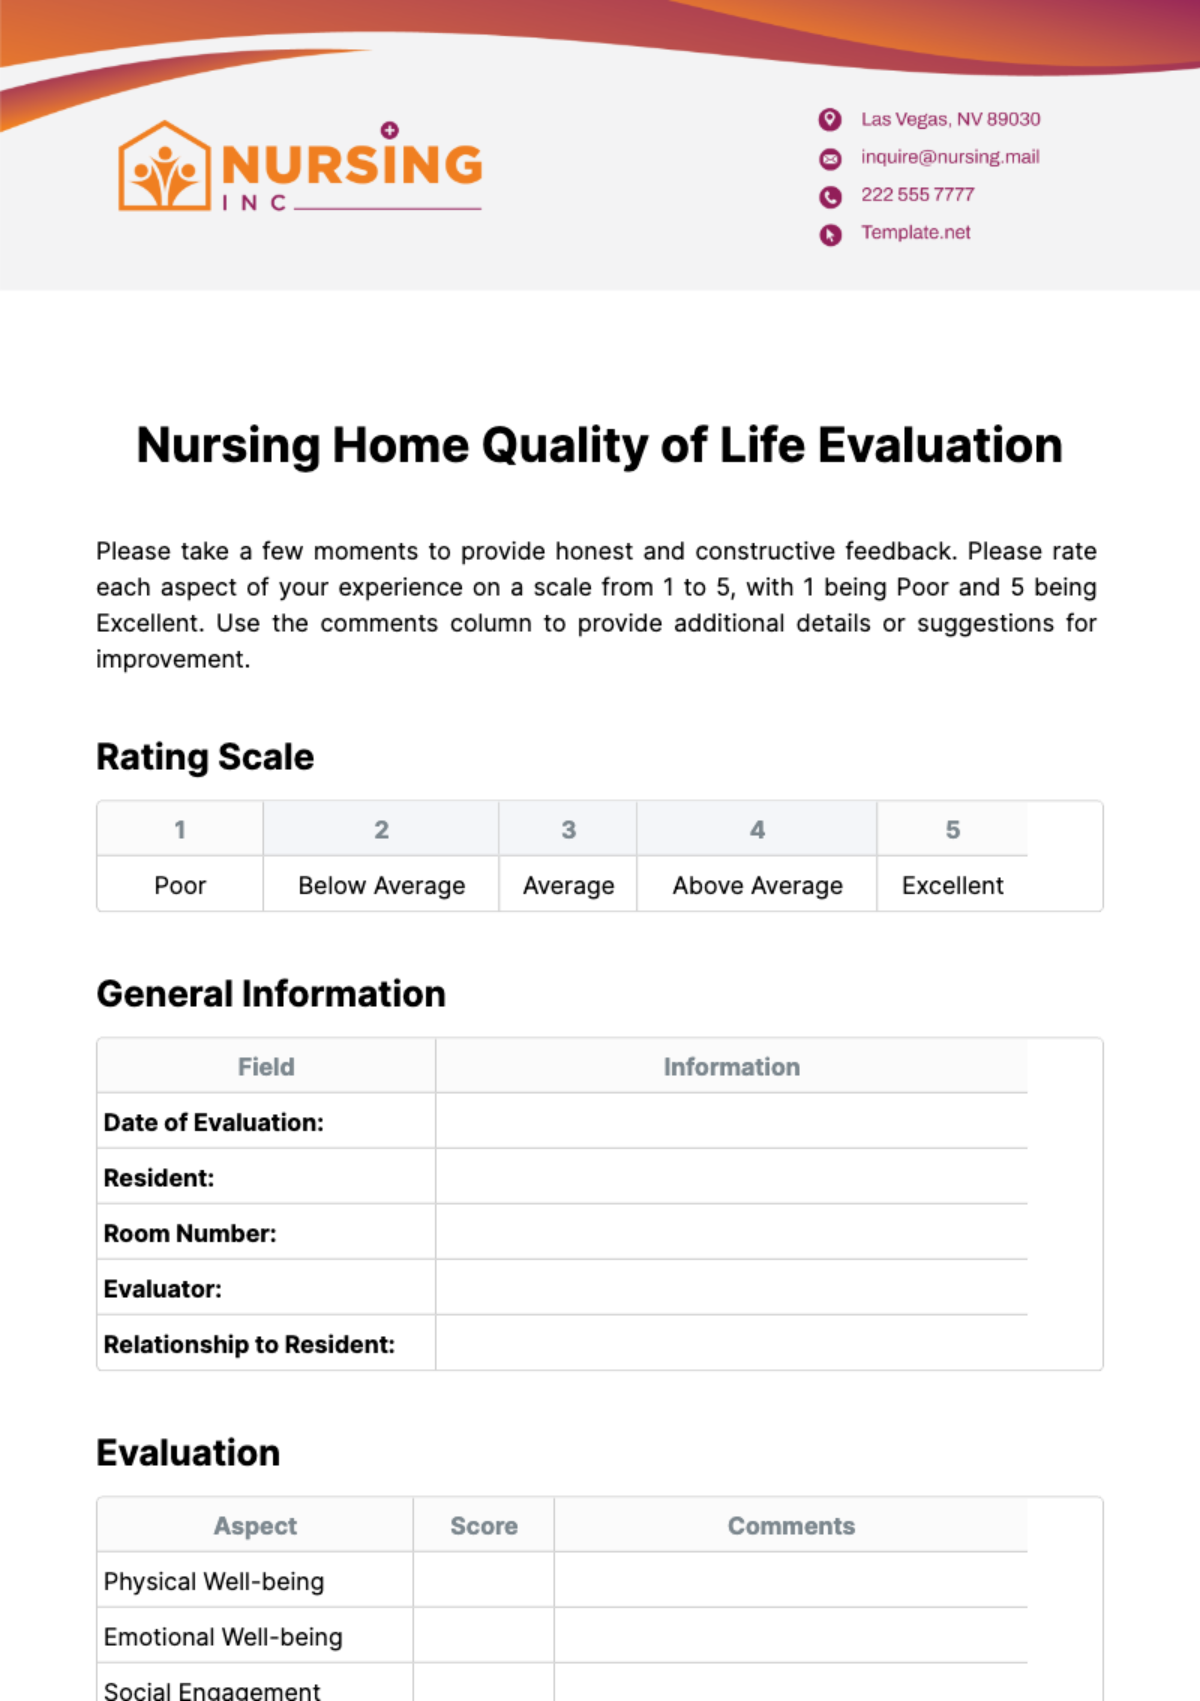 Nursing Home Quality of Life Evaluation Template